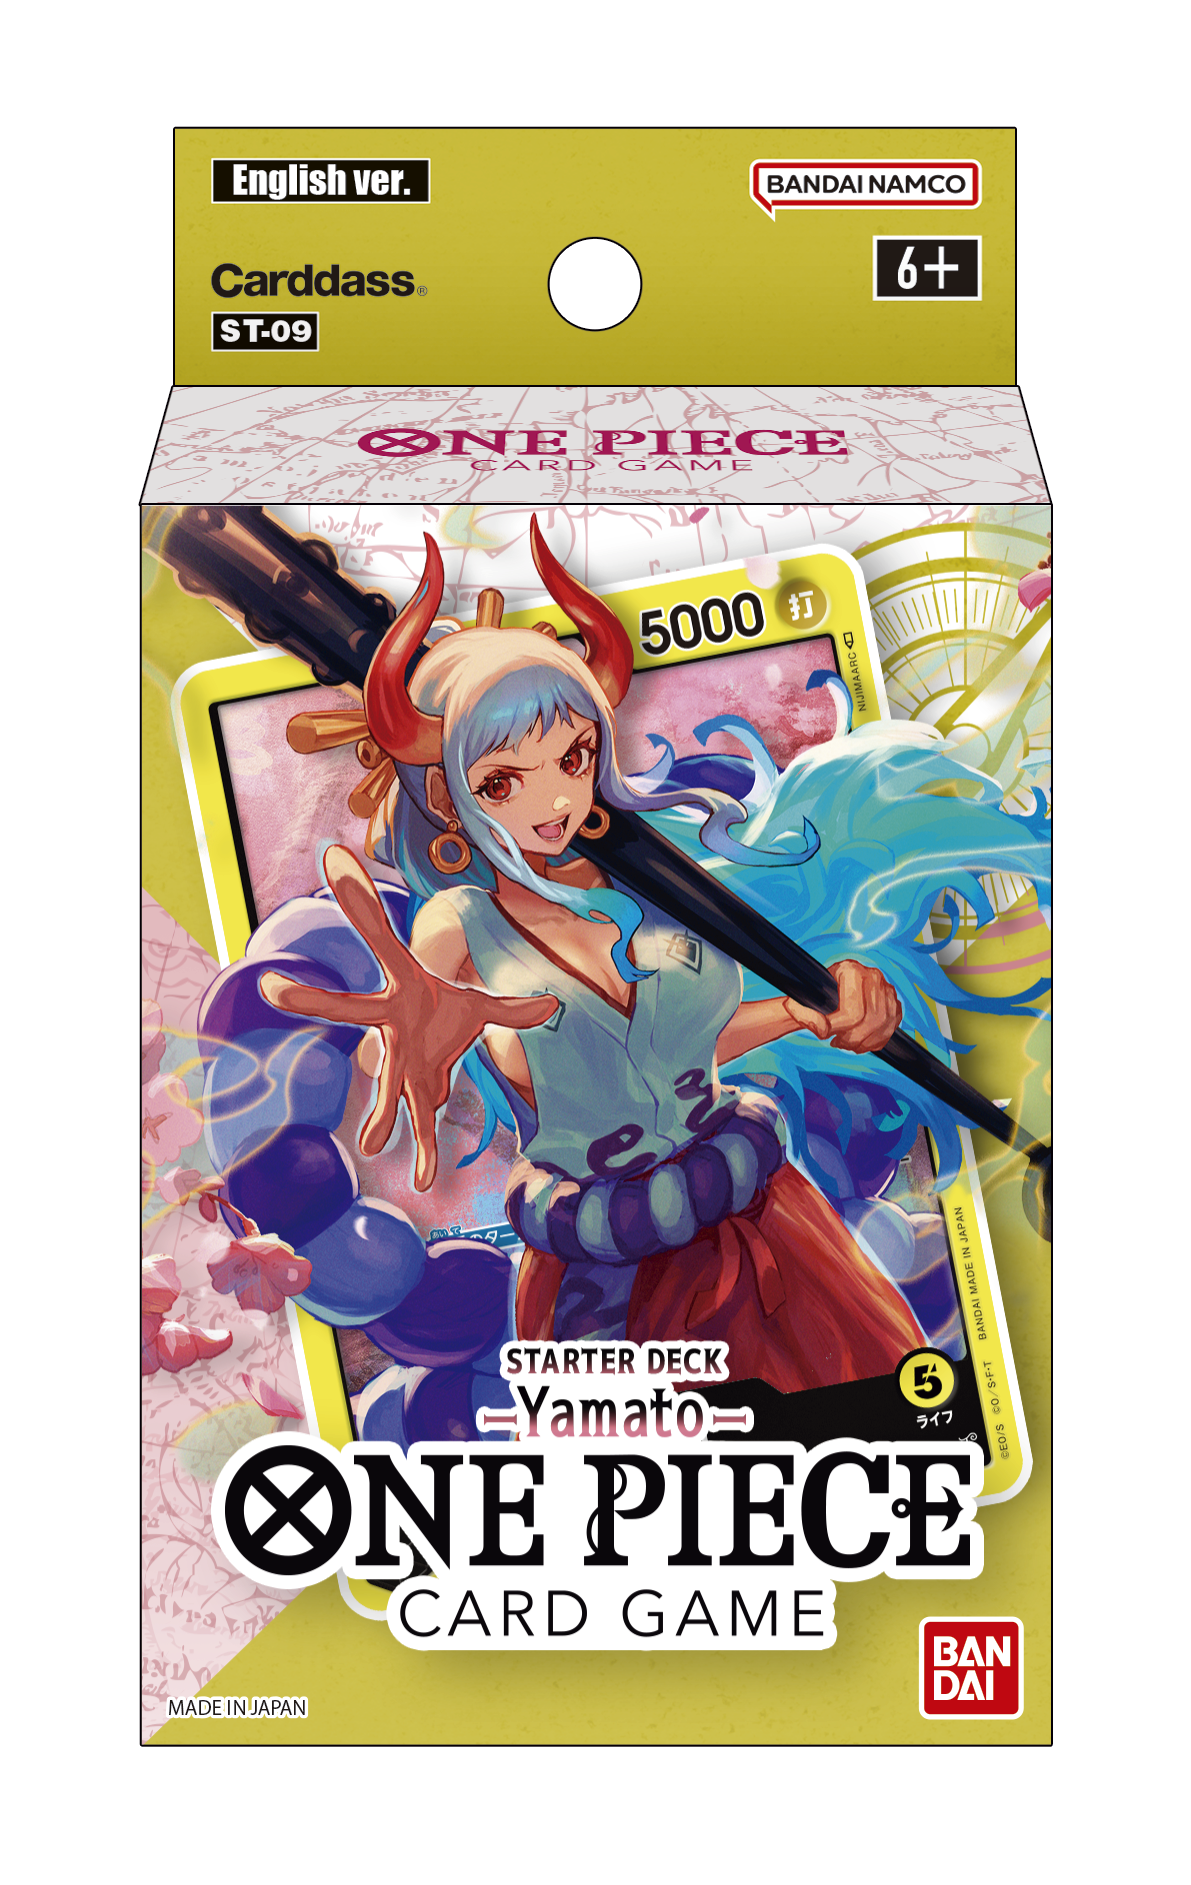 One Piece Card Game Yamato Starter Deck (ST-09)